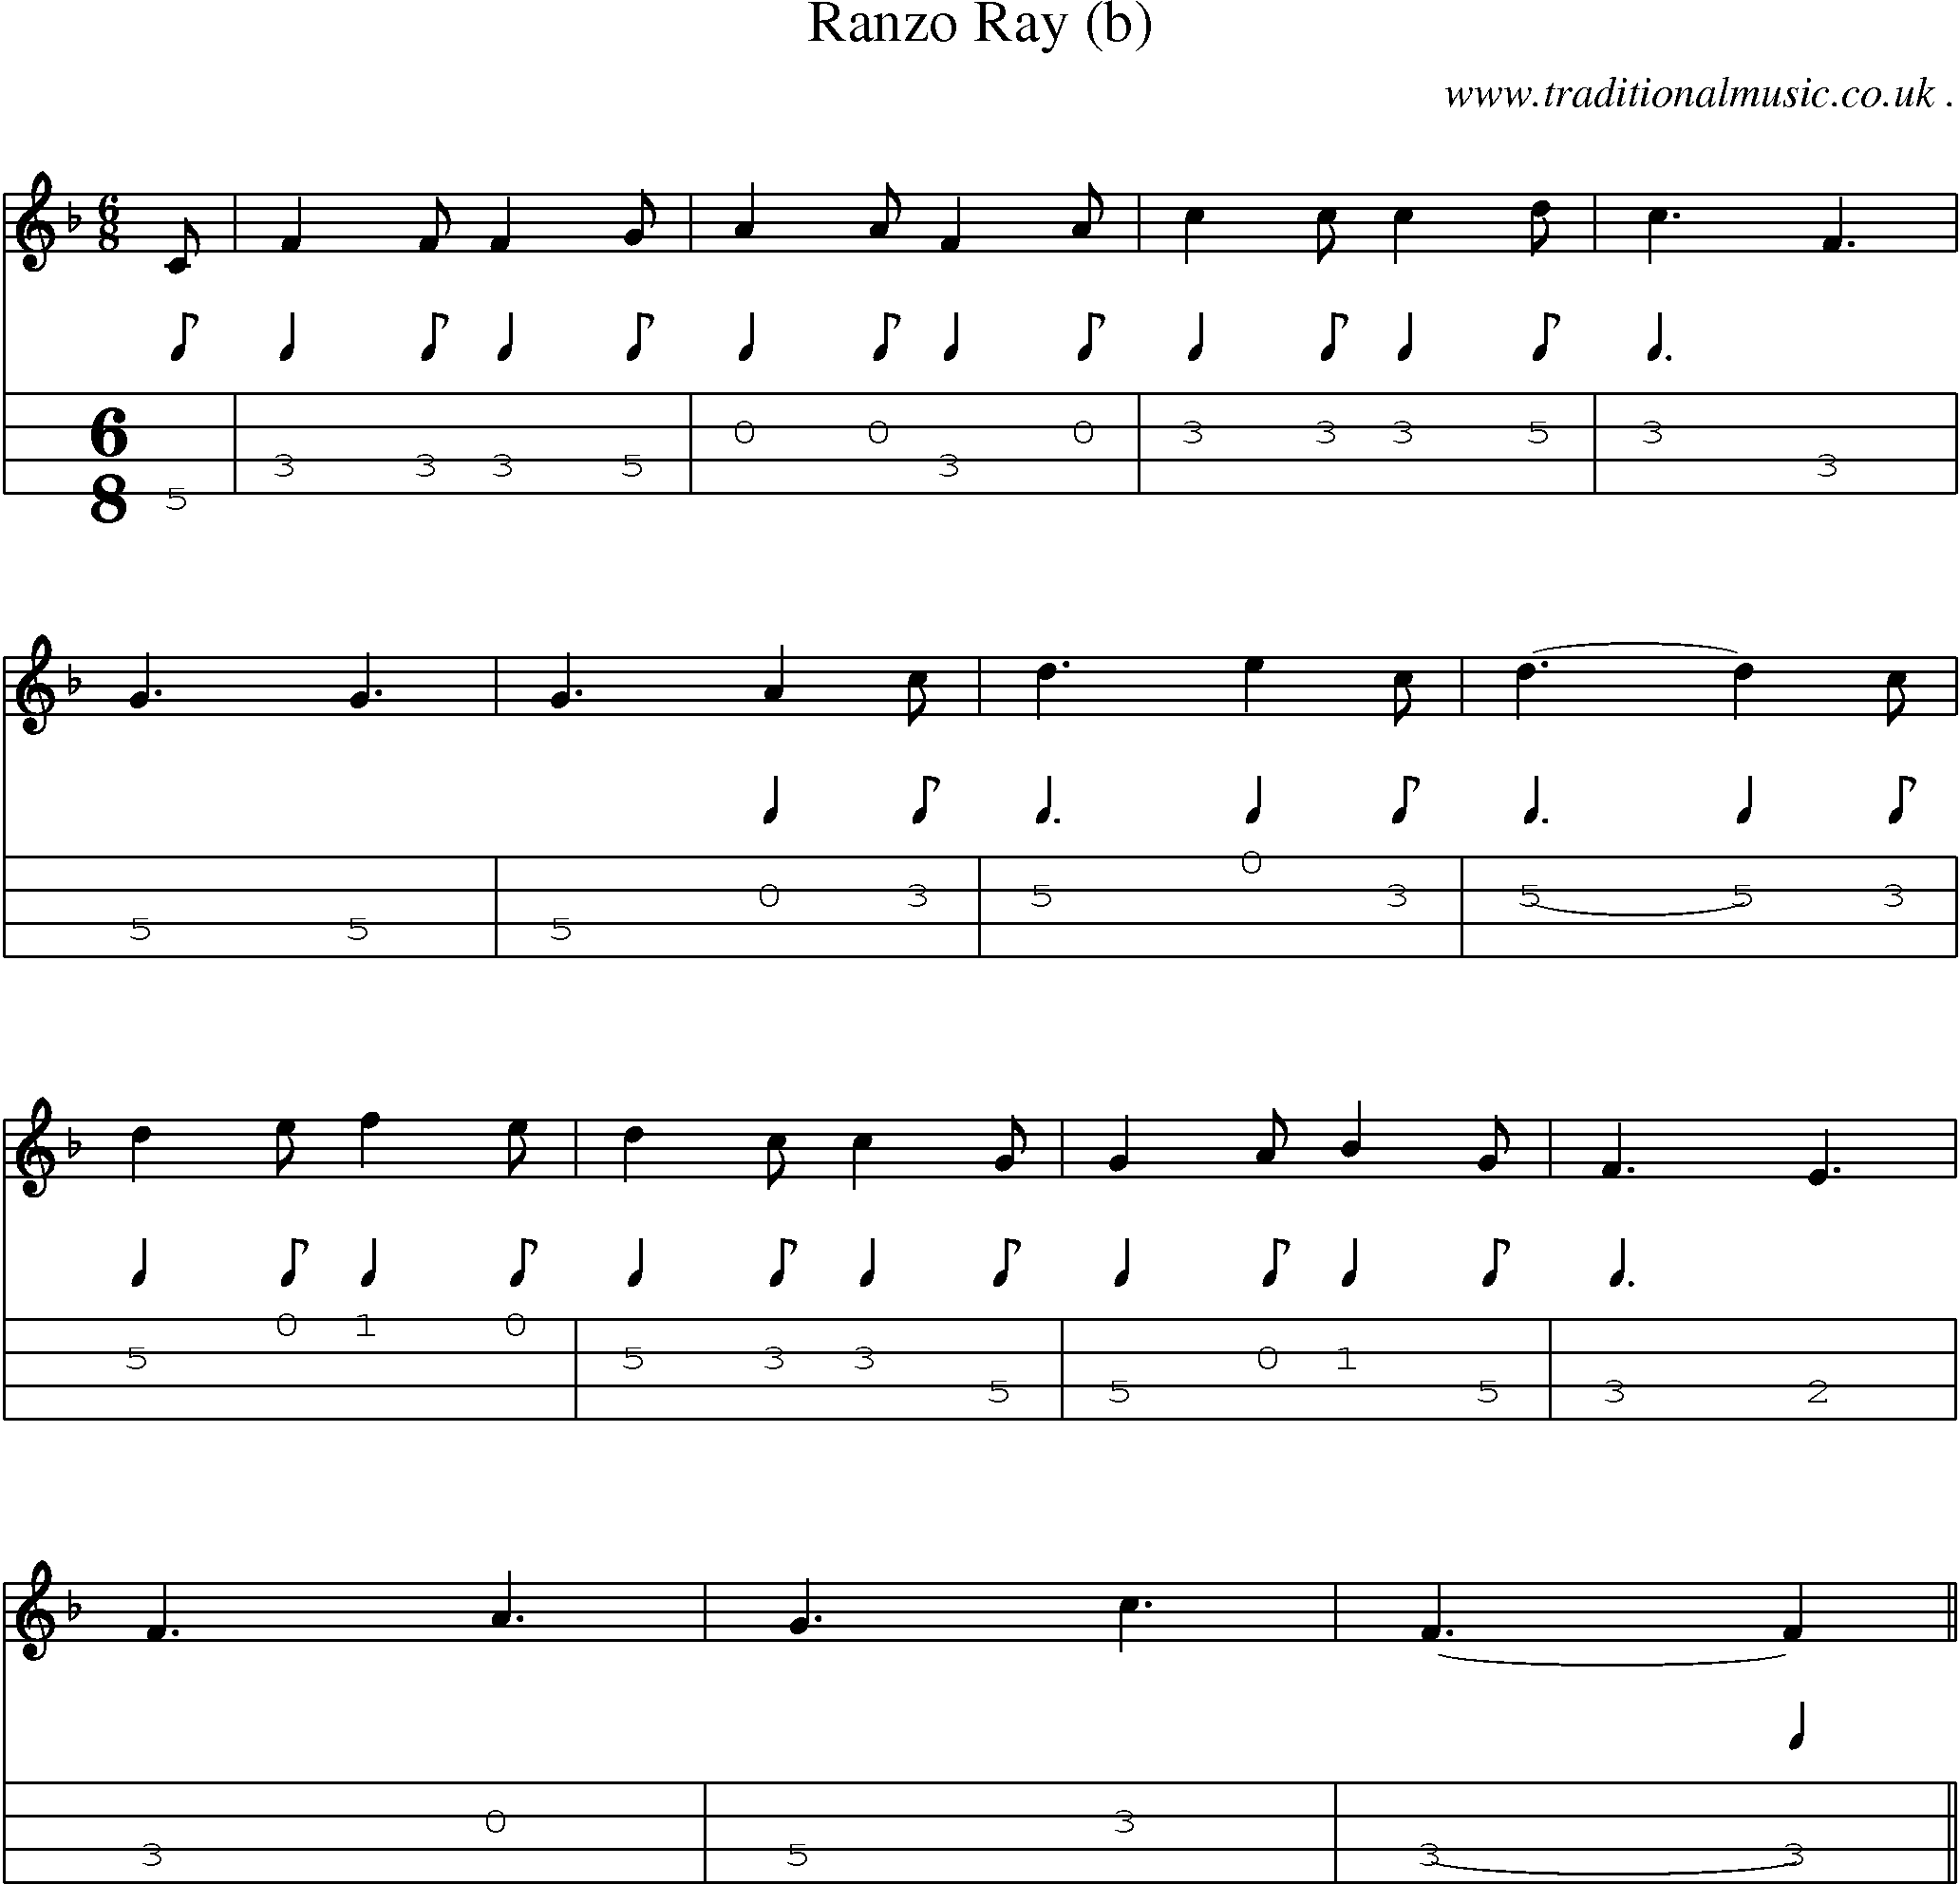 Sheet-Music and Mandolin Tabs for Ranzo Ray (b)